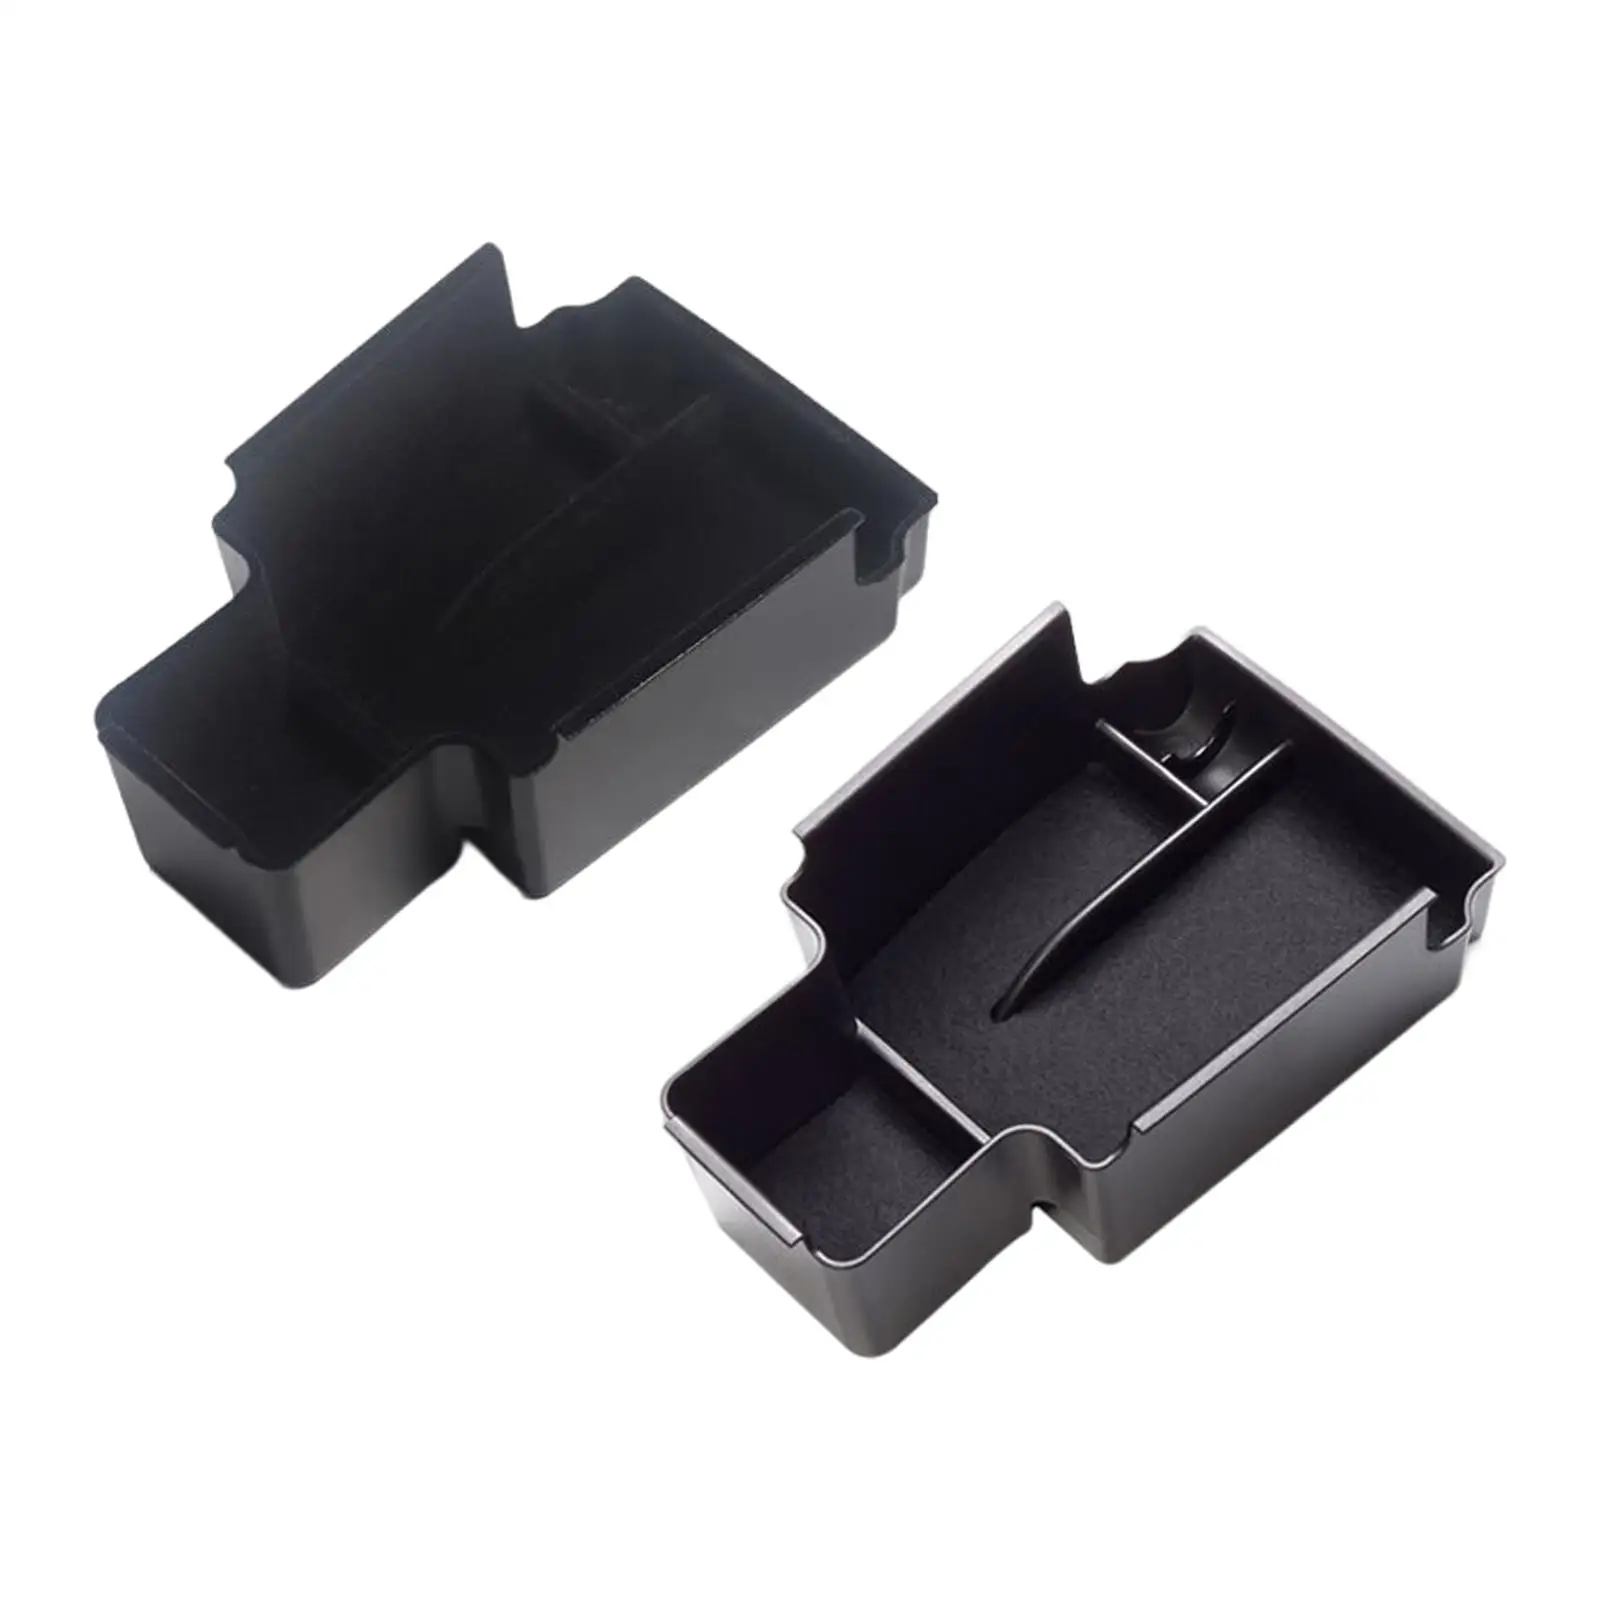 Automotive Center Console Armrest Storage Box Black Organizer Insert Tray for Ora Gwm Good Cat Interior Accessories Durable